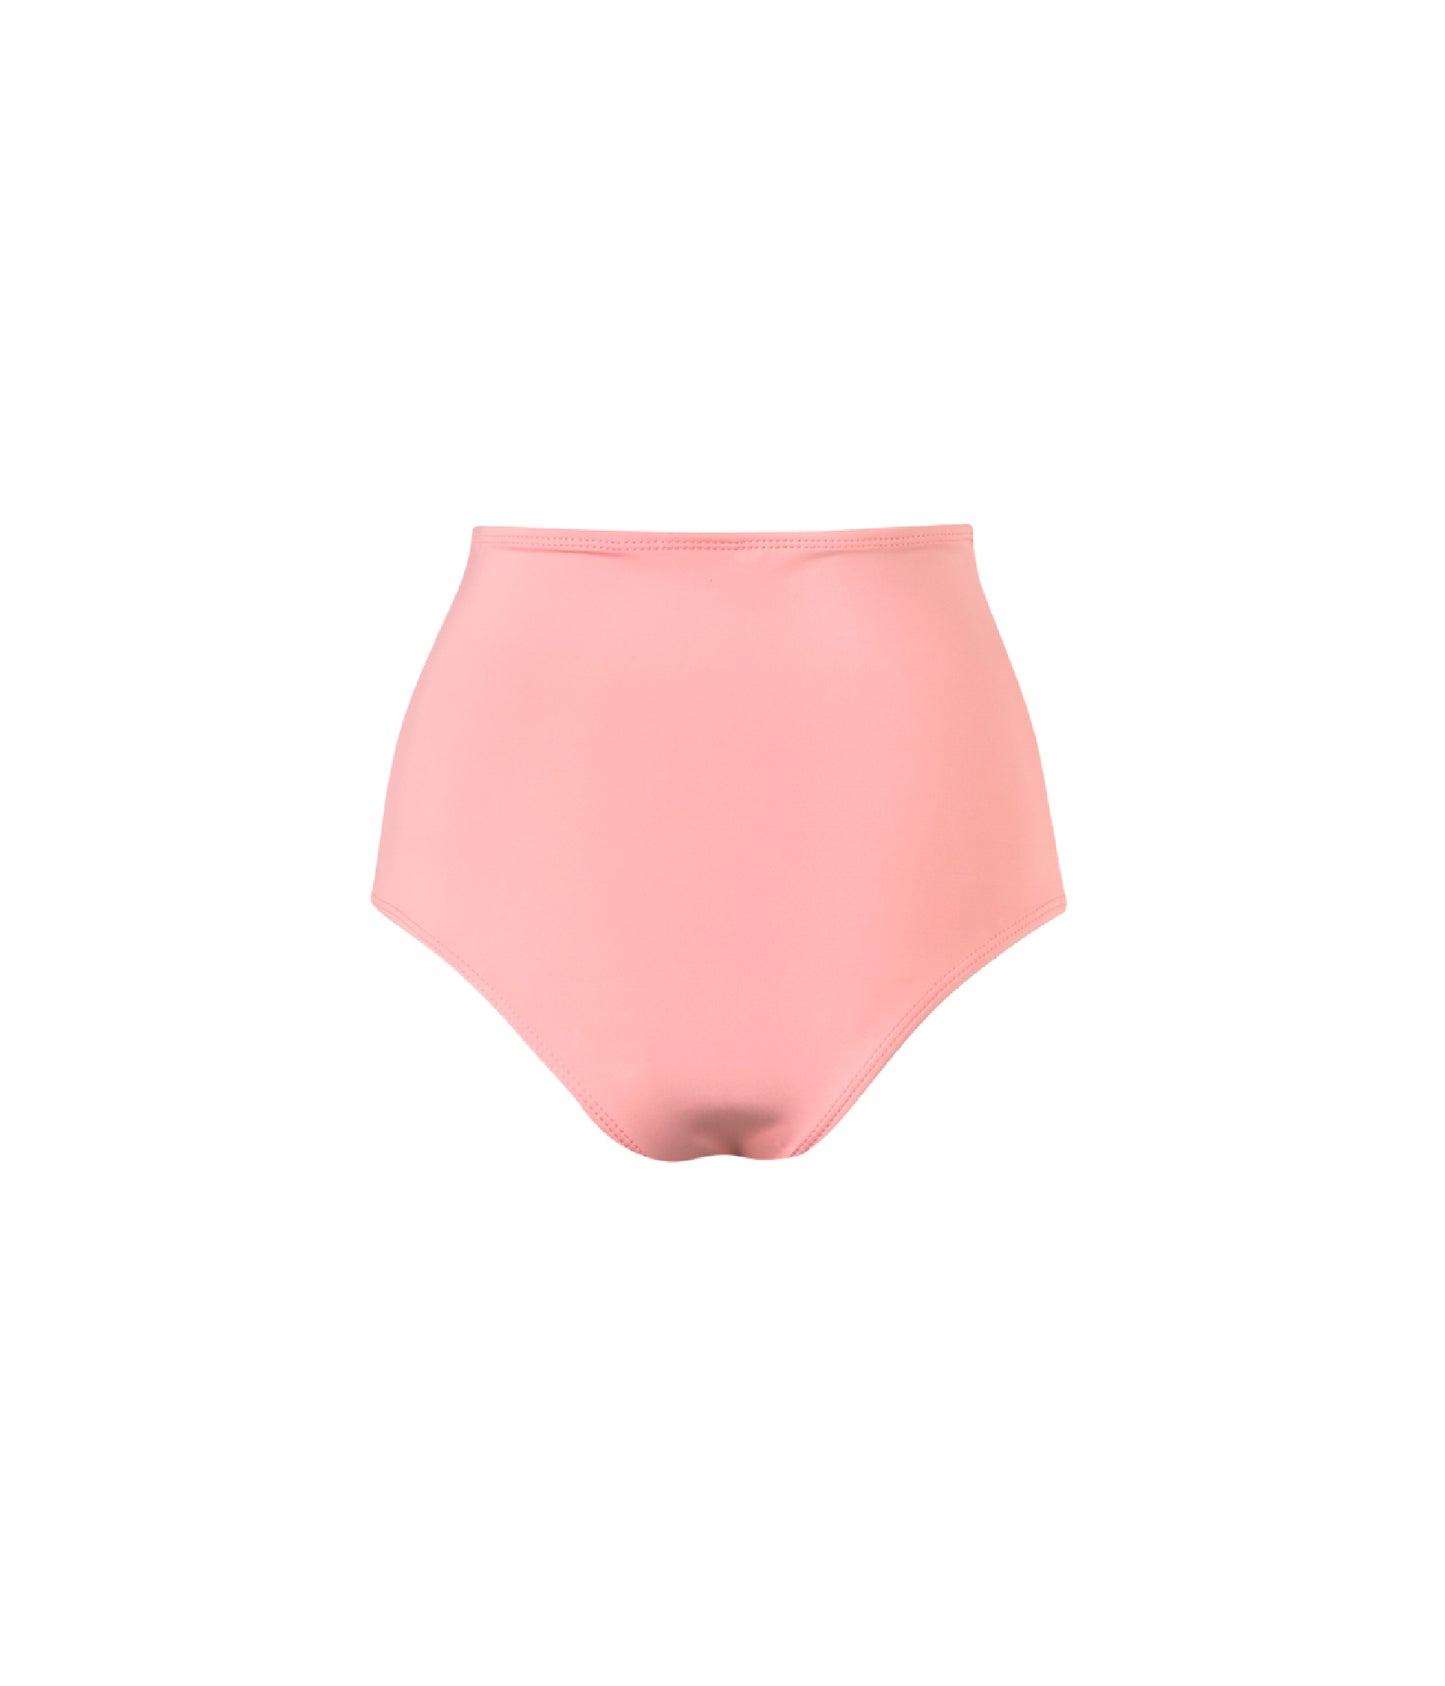 Verdelimon - Bikini Bottom - Banes  - Printed - Rose - Back